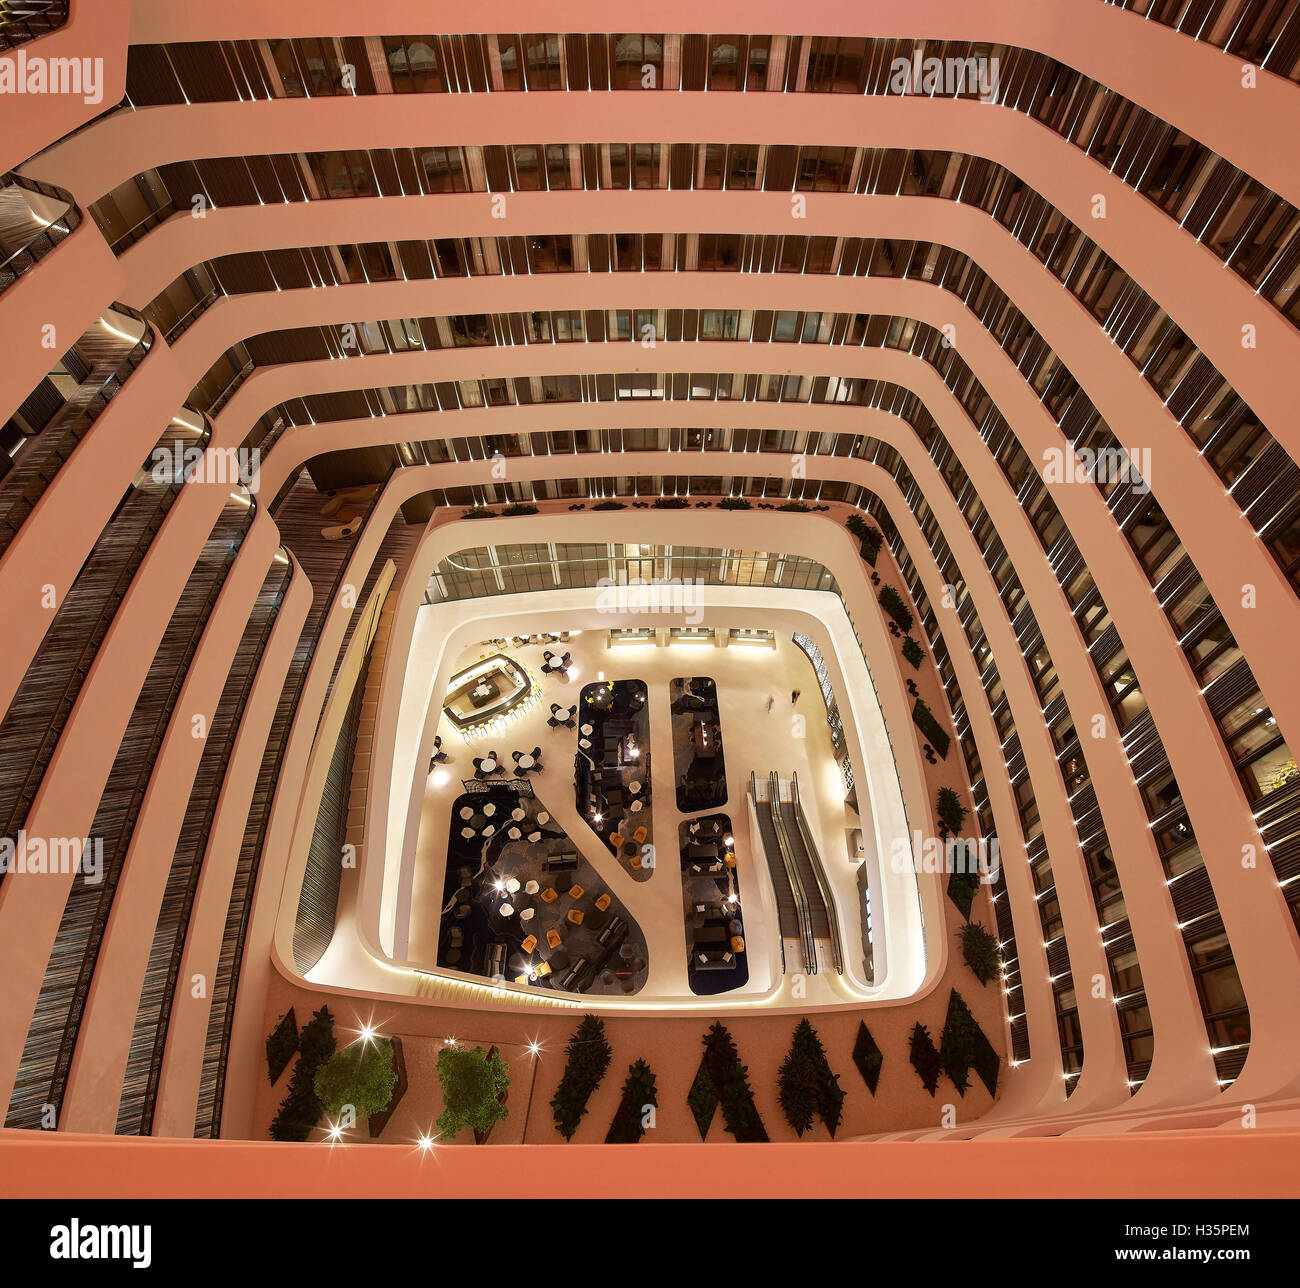 Illuminated foyer on ground floor viewed from above. Hilton Amsterdam Airport Schiphol, Amsterdam, Netherlands. Architect: Mecanoo Architects, 2015. Stock Photo